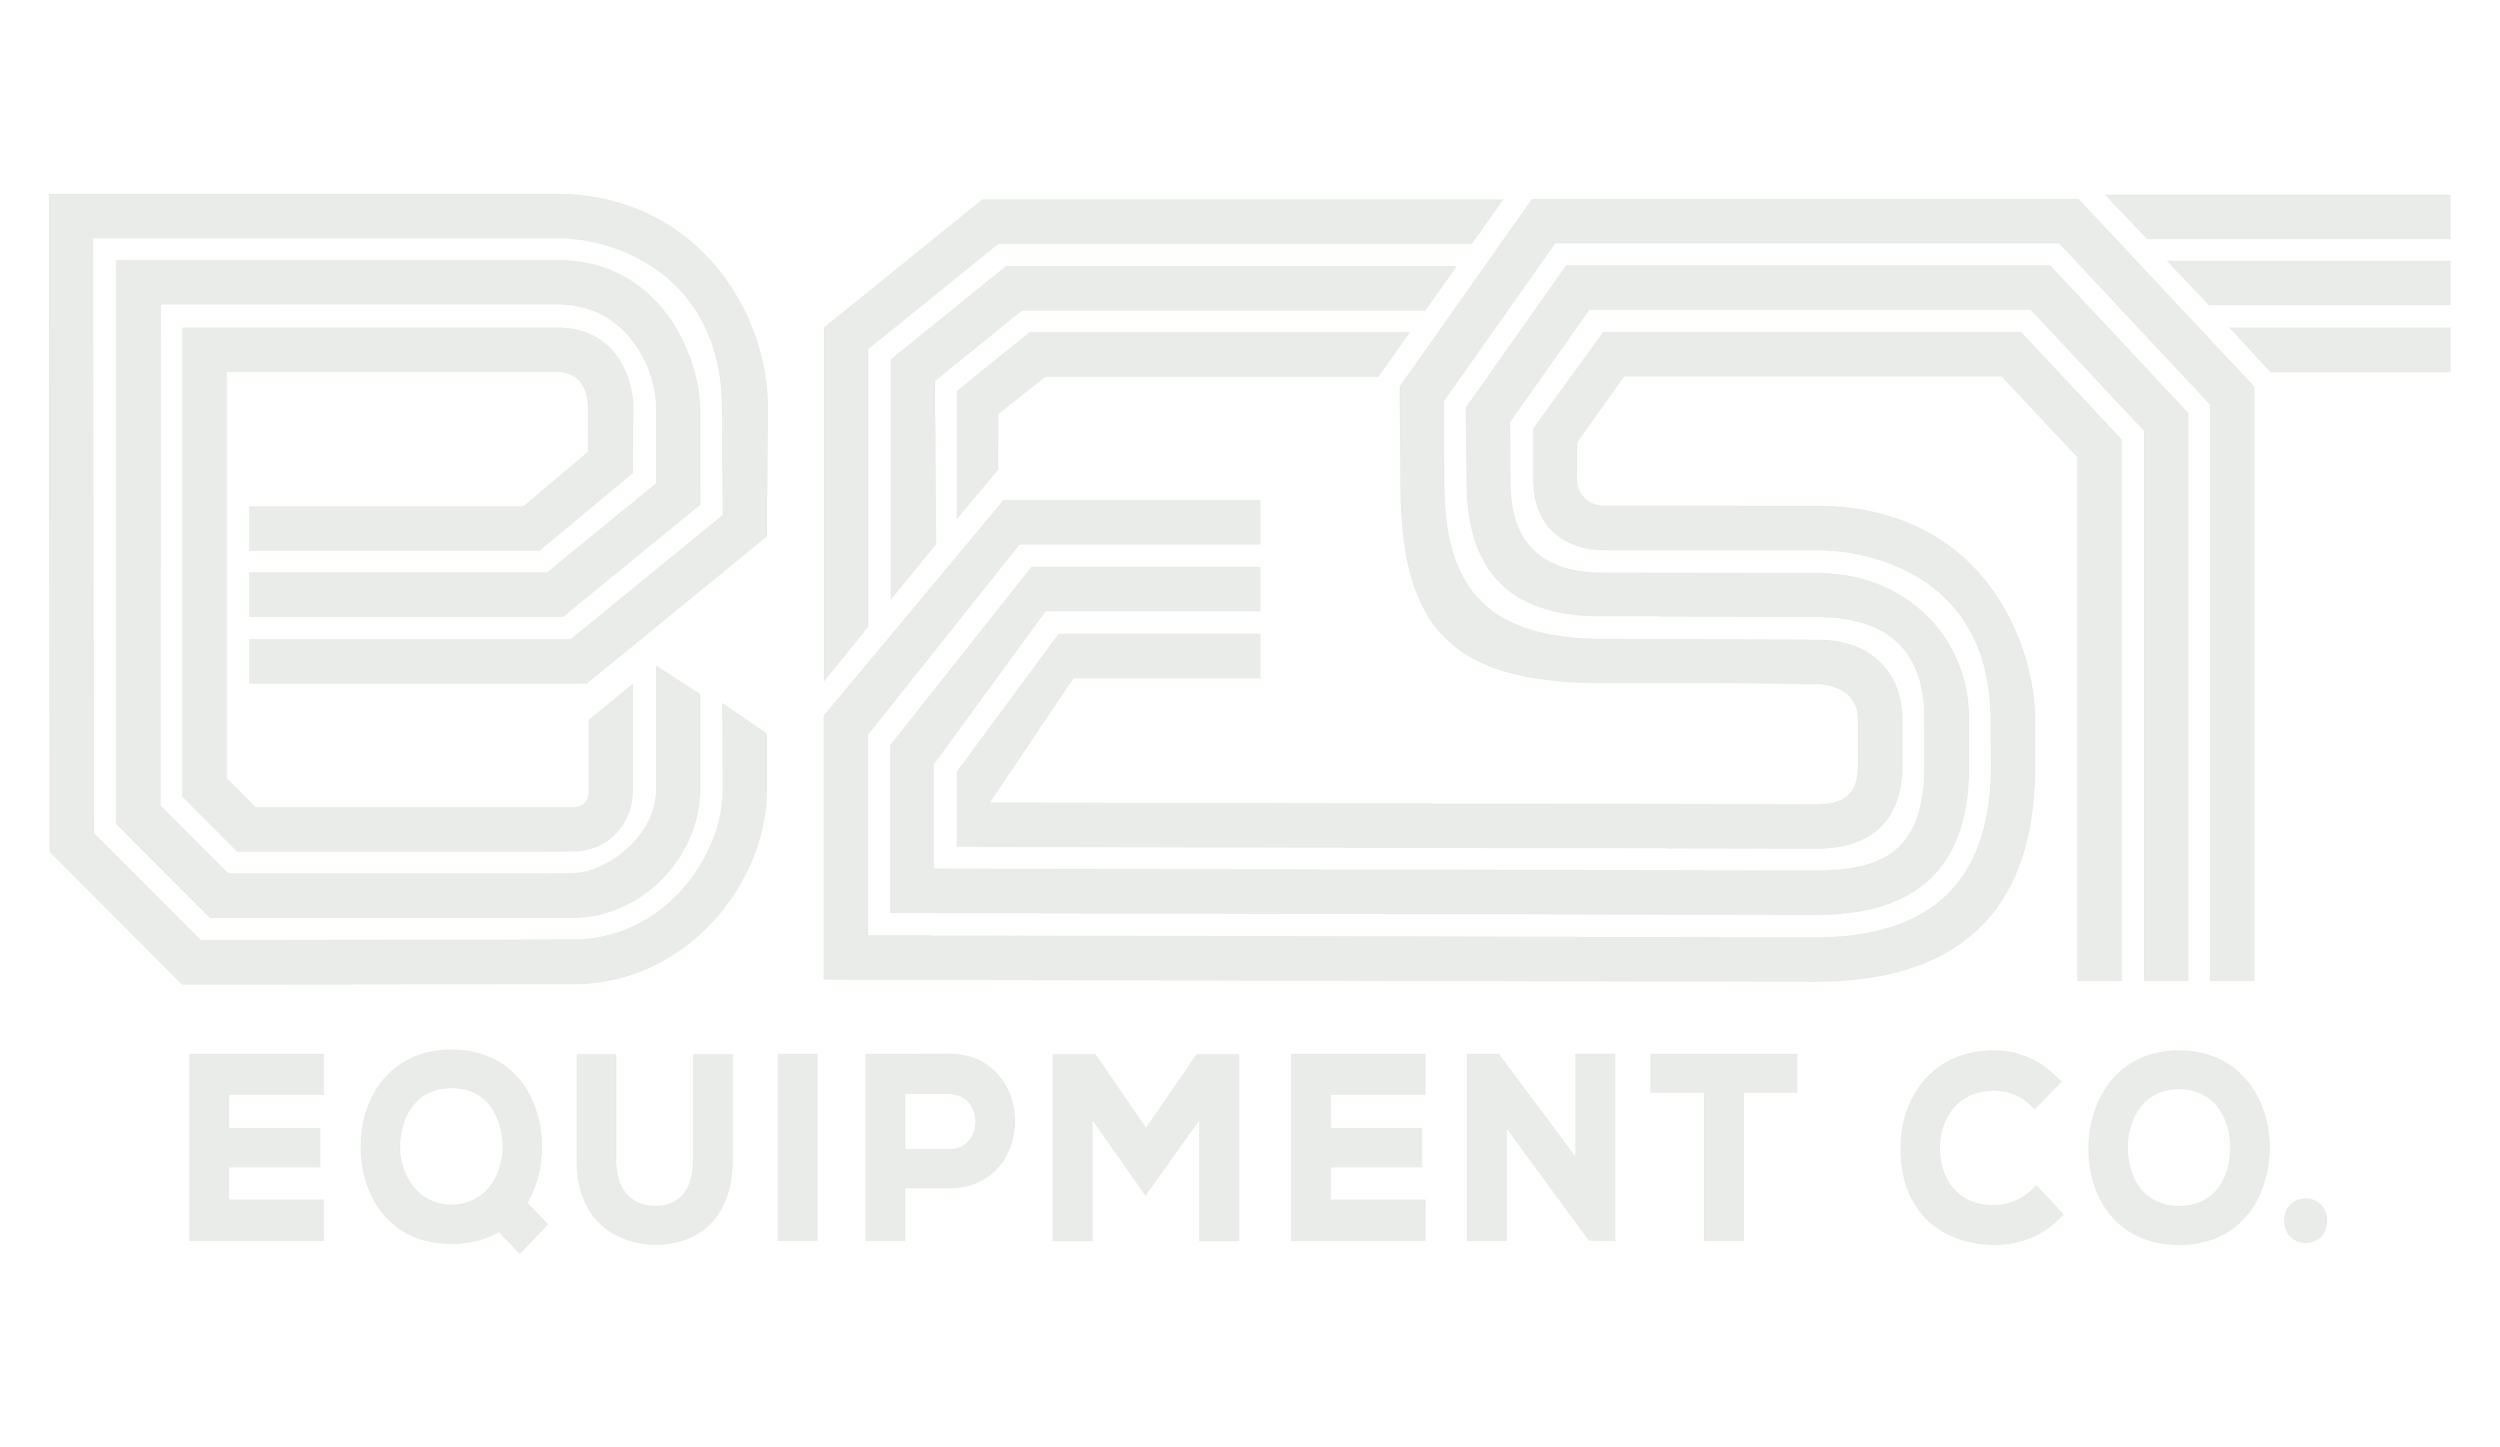 Best Equipment Co., Inc.